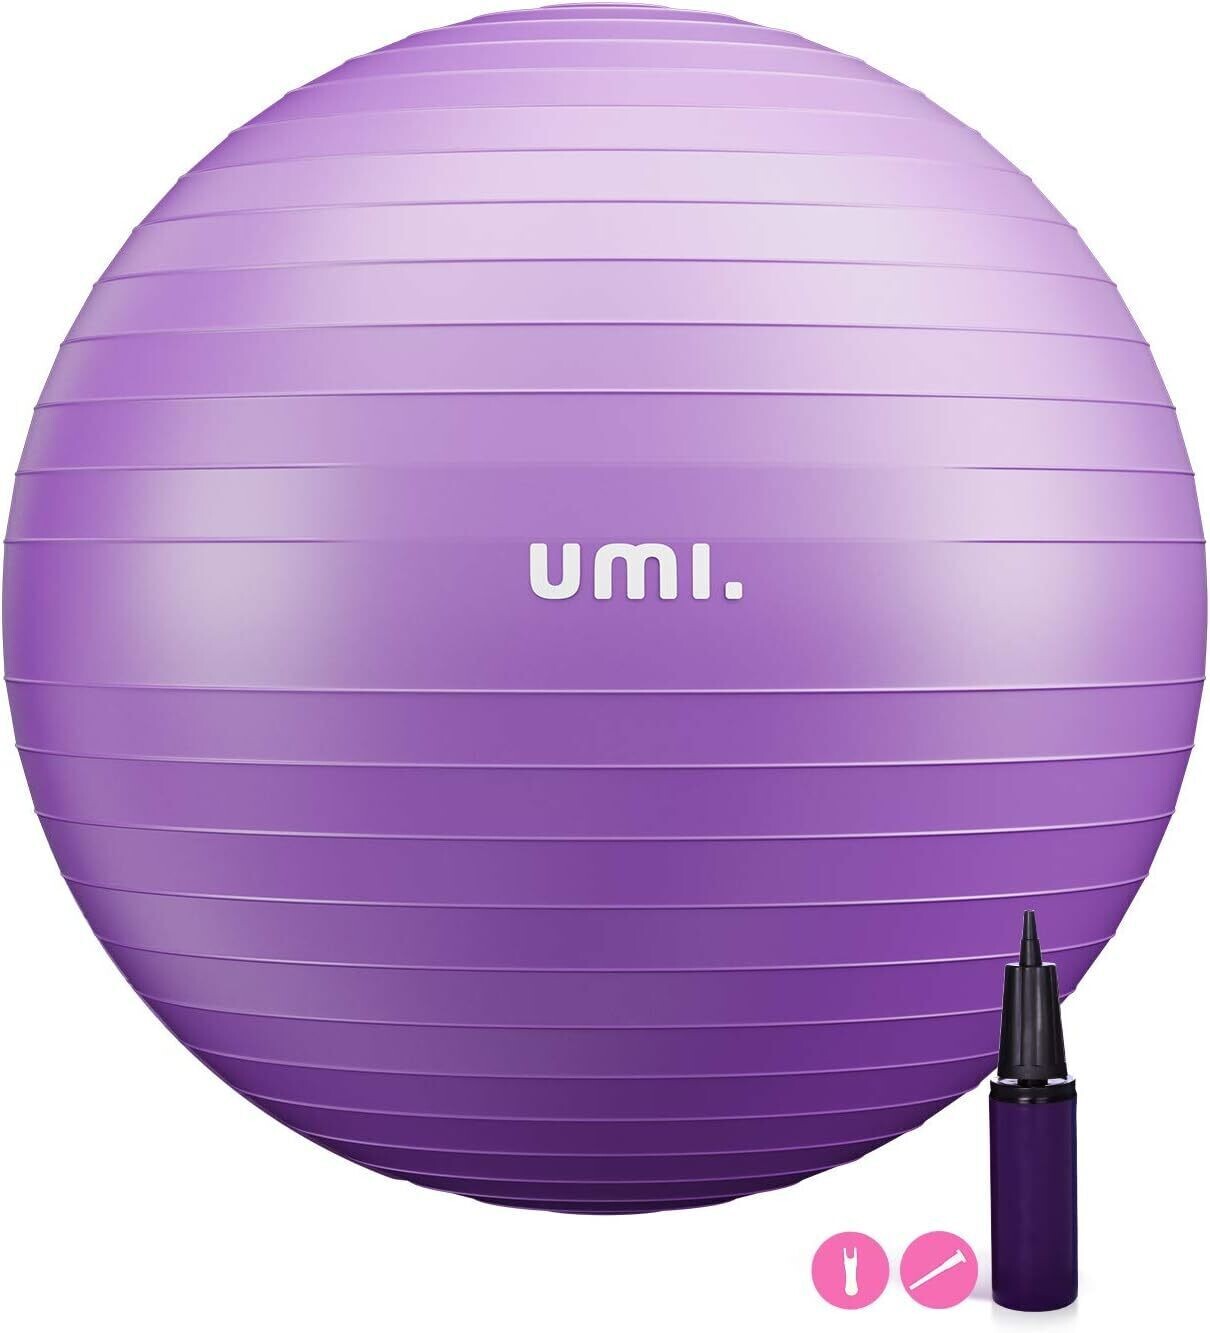 500 kg Load Capacity Anti-Burst Sitting Fitness Ball 48 cm - 75 cm with Ball Pump for Yoga Pilates, Balance Exercise Core Training